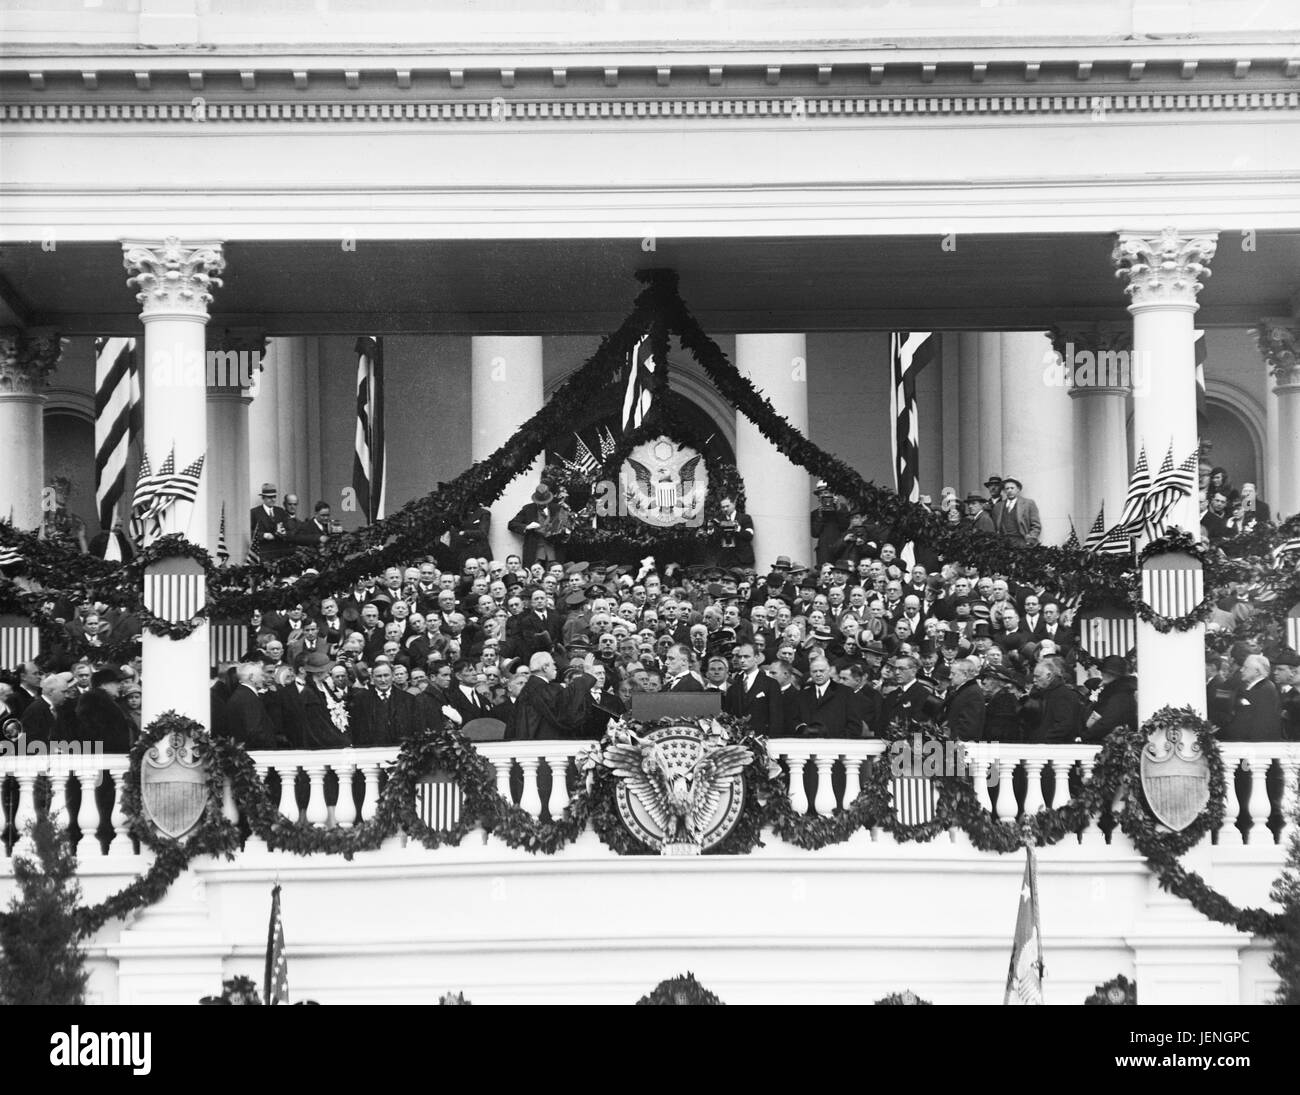 Inauguration of U.S. President Franklin Roosevelt, Washington DC, USA, Harris & Ewing, March 4, 1933 Stock Photo